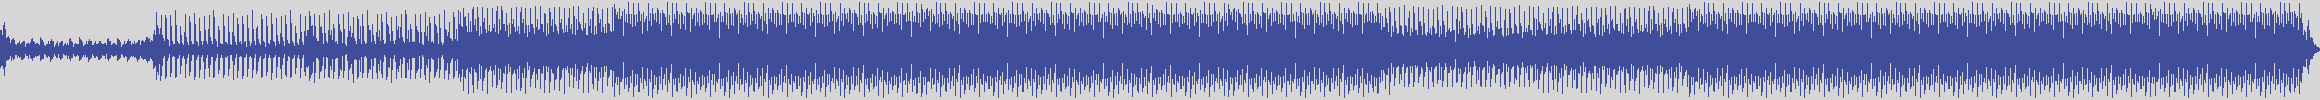 atomic_recordings [AR007] House Group - Aquaspeed [Club Mix] audio wave form